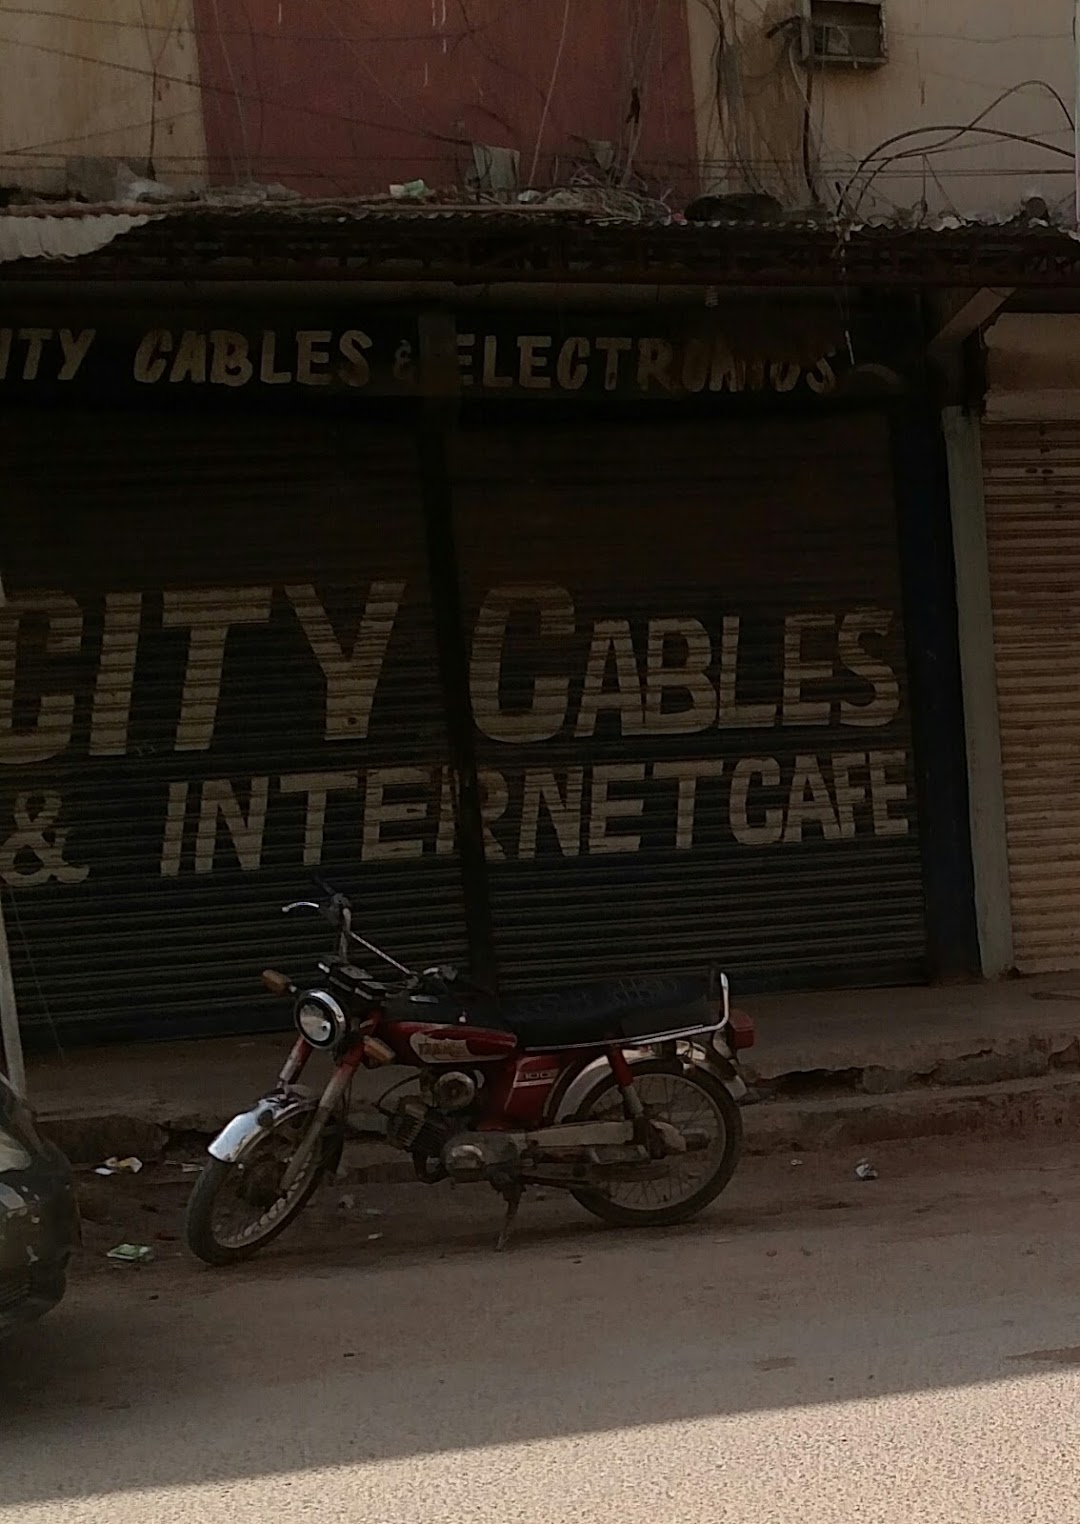 City Cables & Electronics